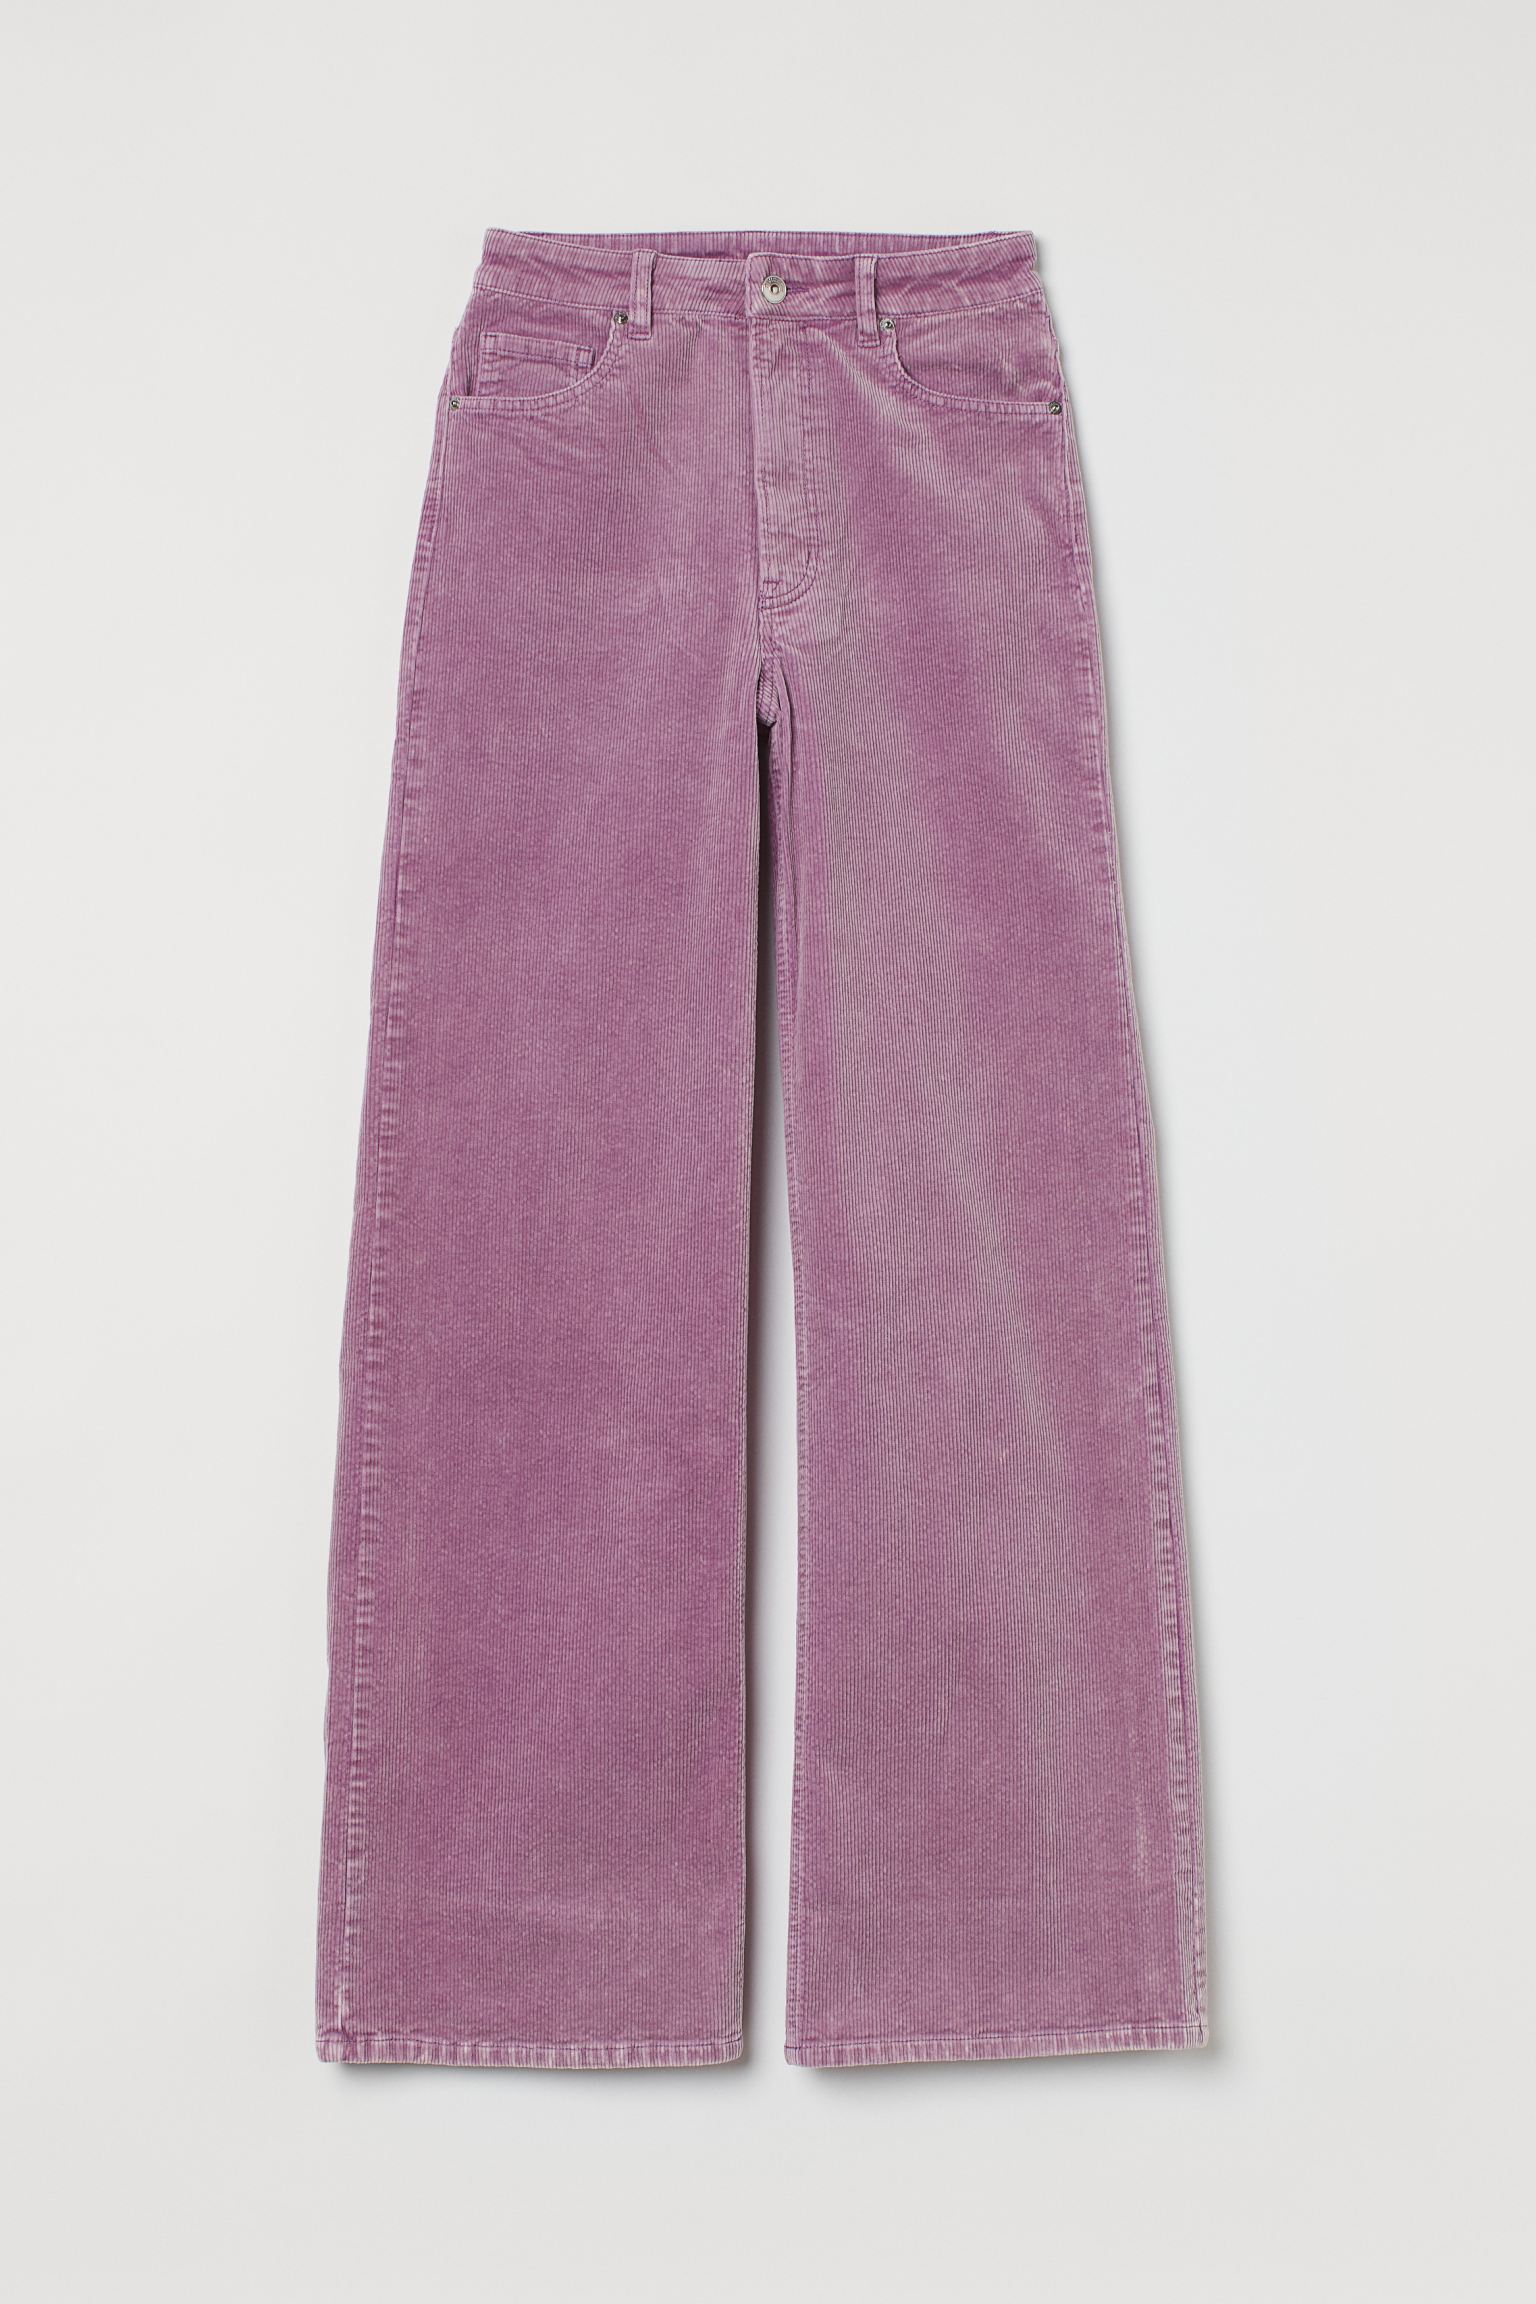 Pantalón de pana en lila de H&M para este otoño-invierno